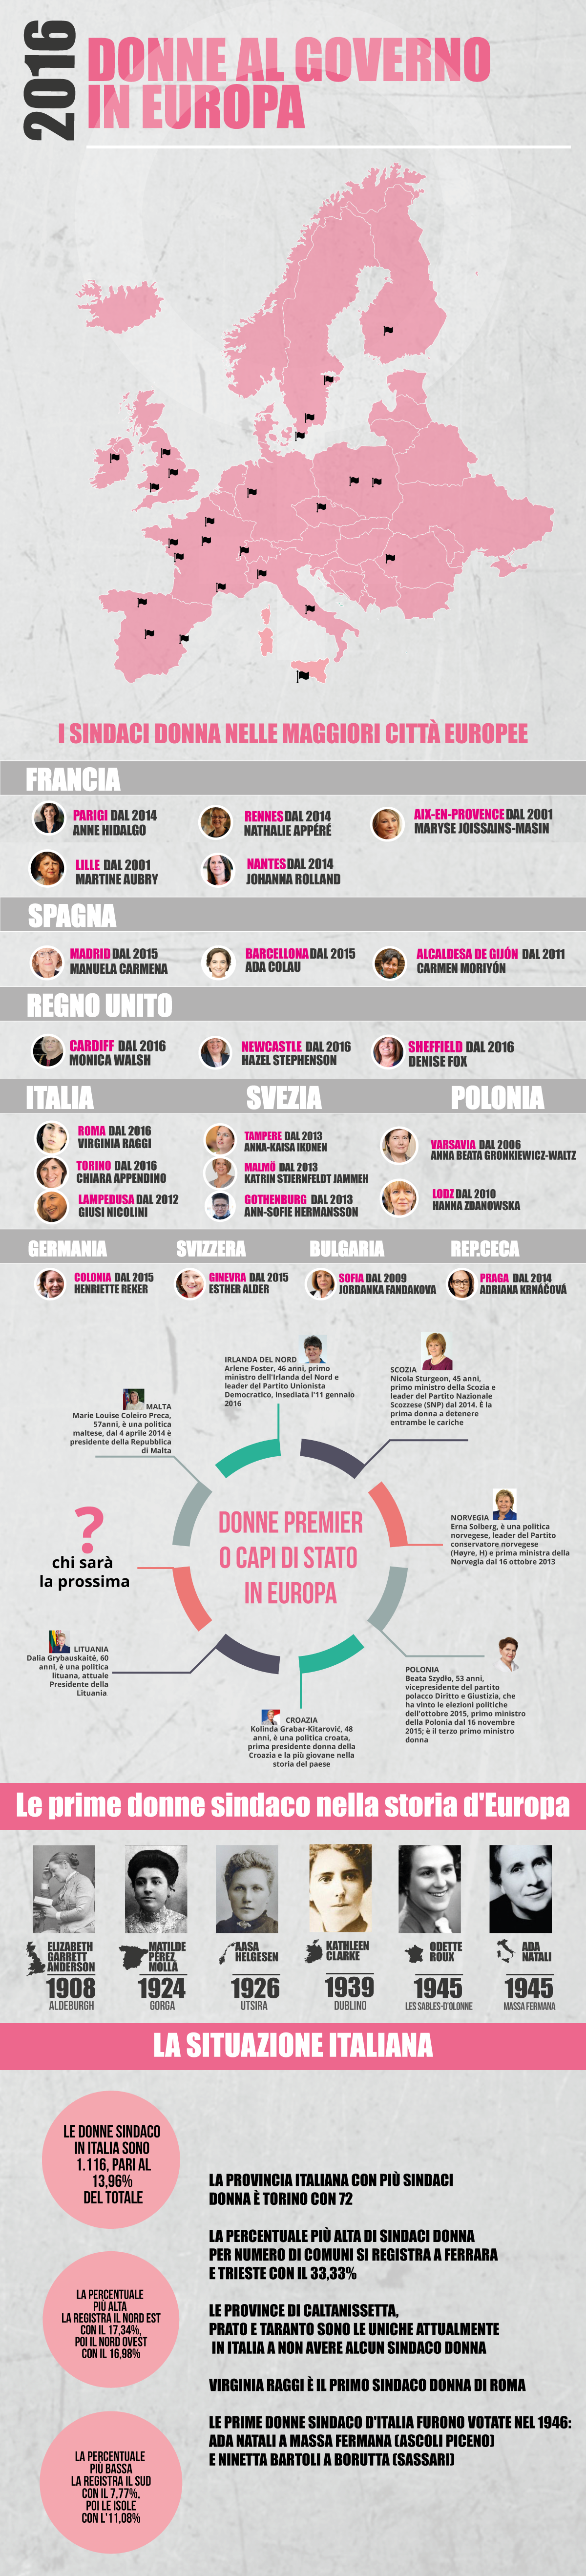 Le donne al potere in Europa (Stampaprint)